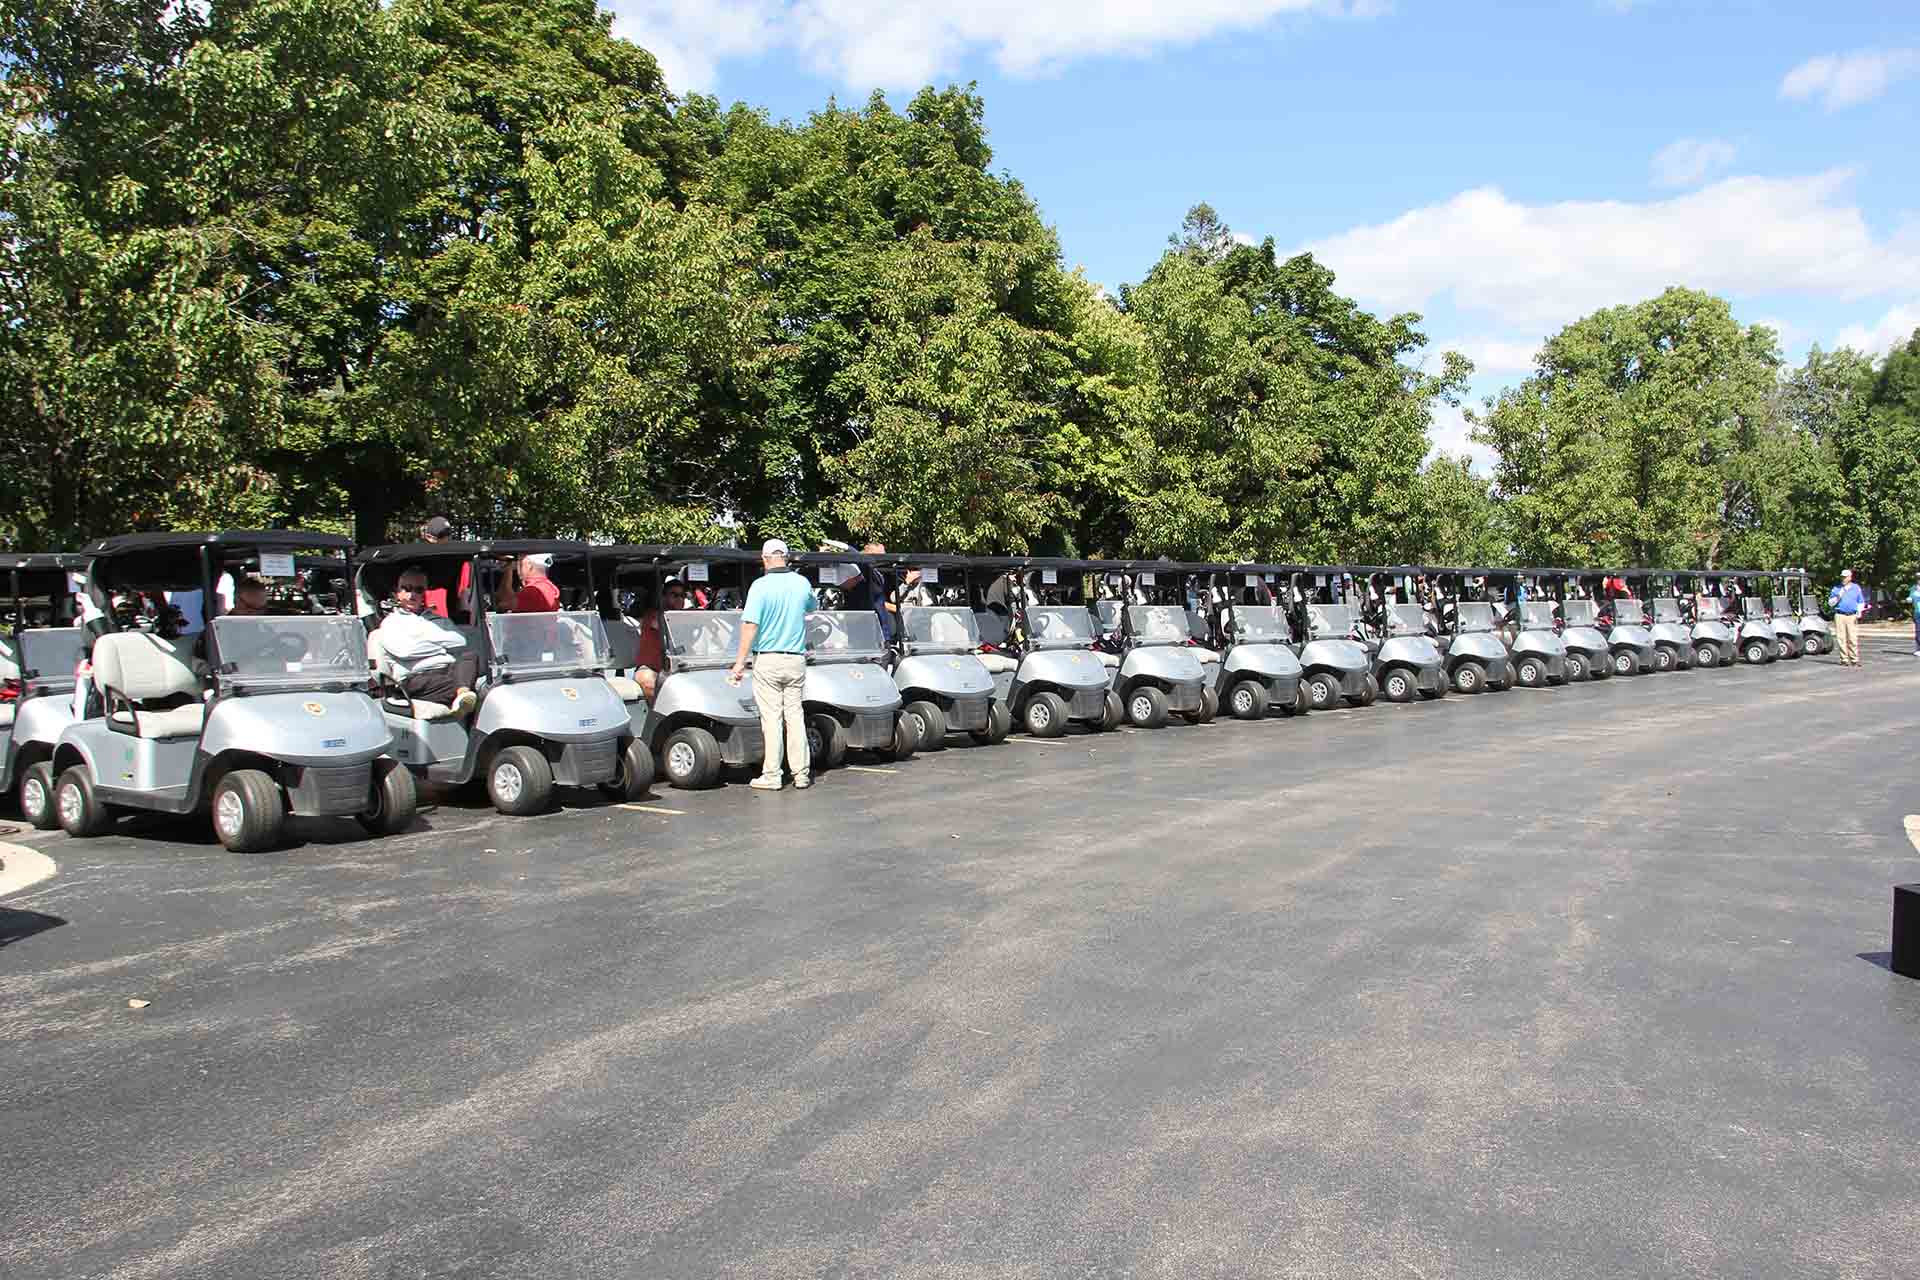 2022-Endowment-Golf-Classic-wide-angle-shot-of-golf-carts